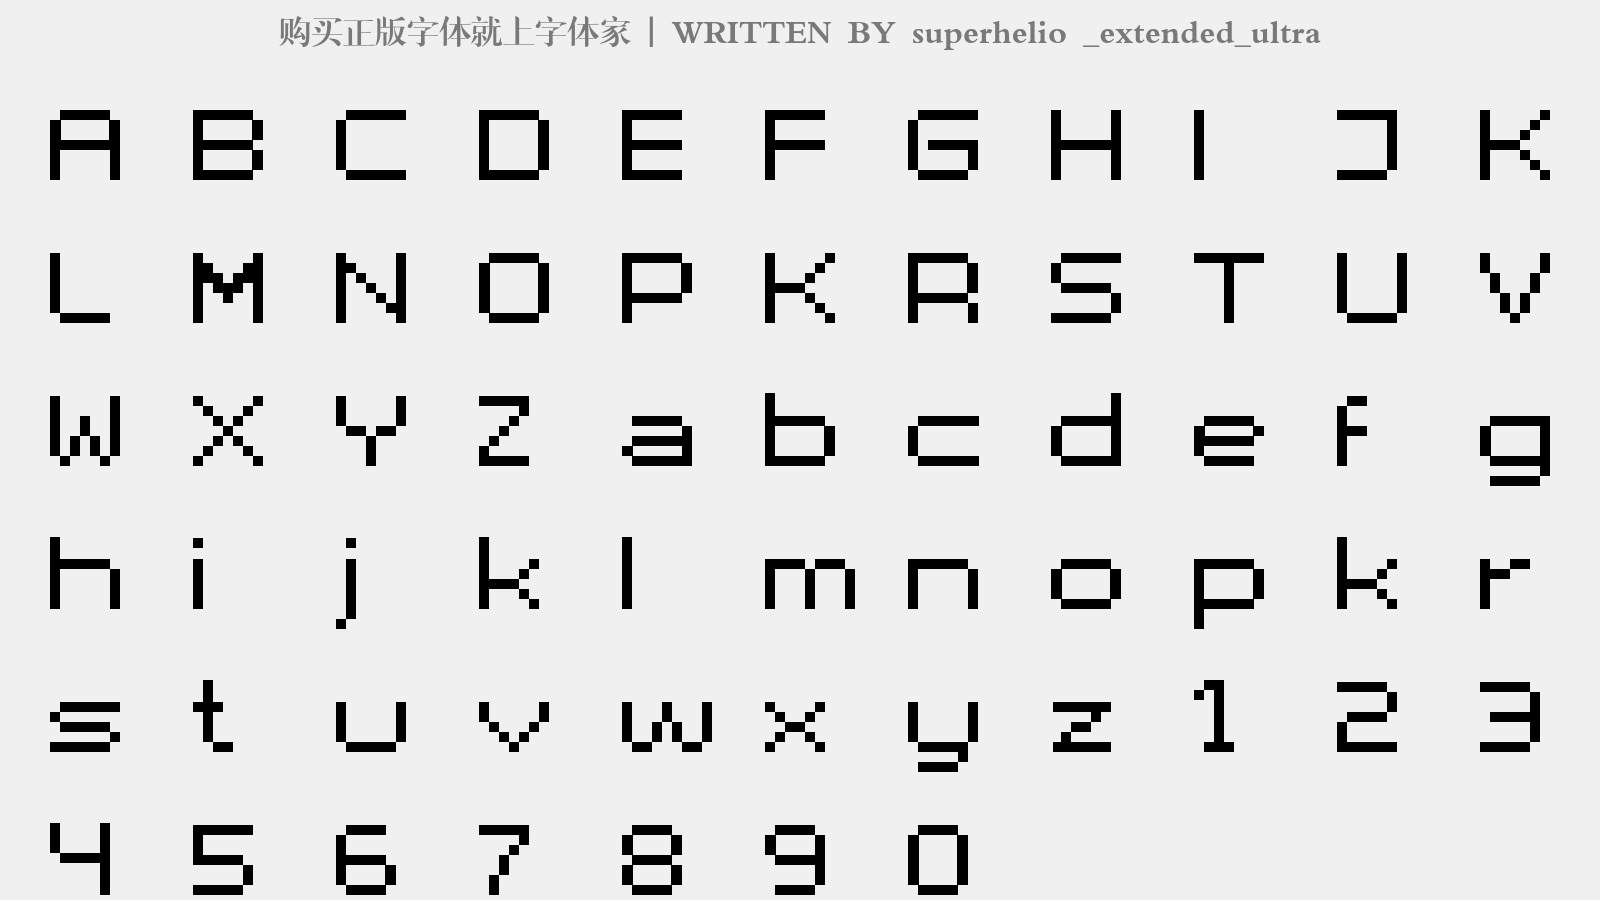 superhelio _extended_ultra - 大写字母/小写字母/数字